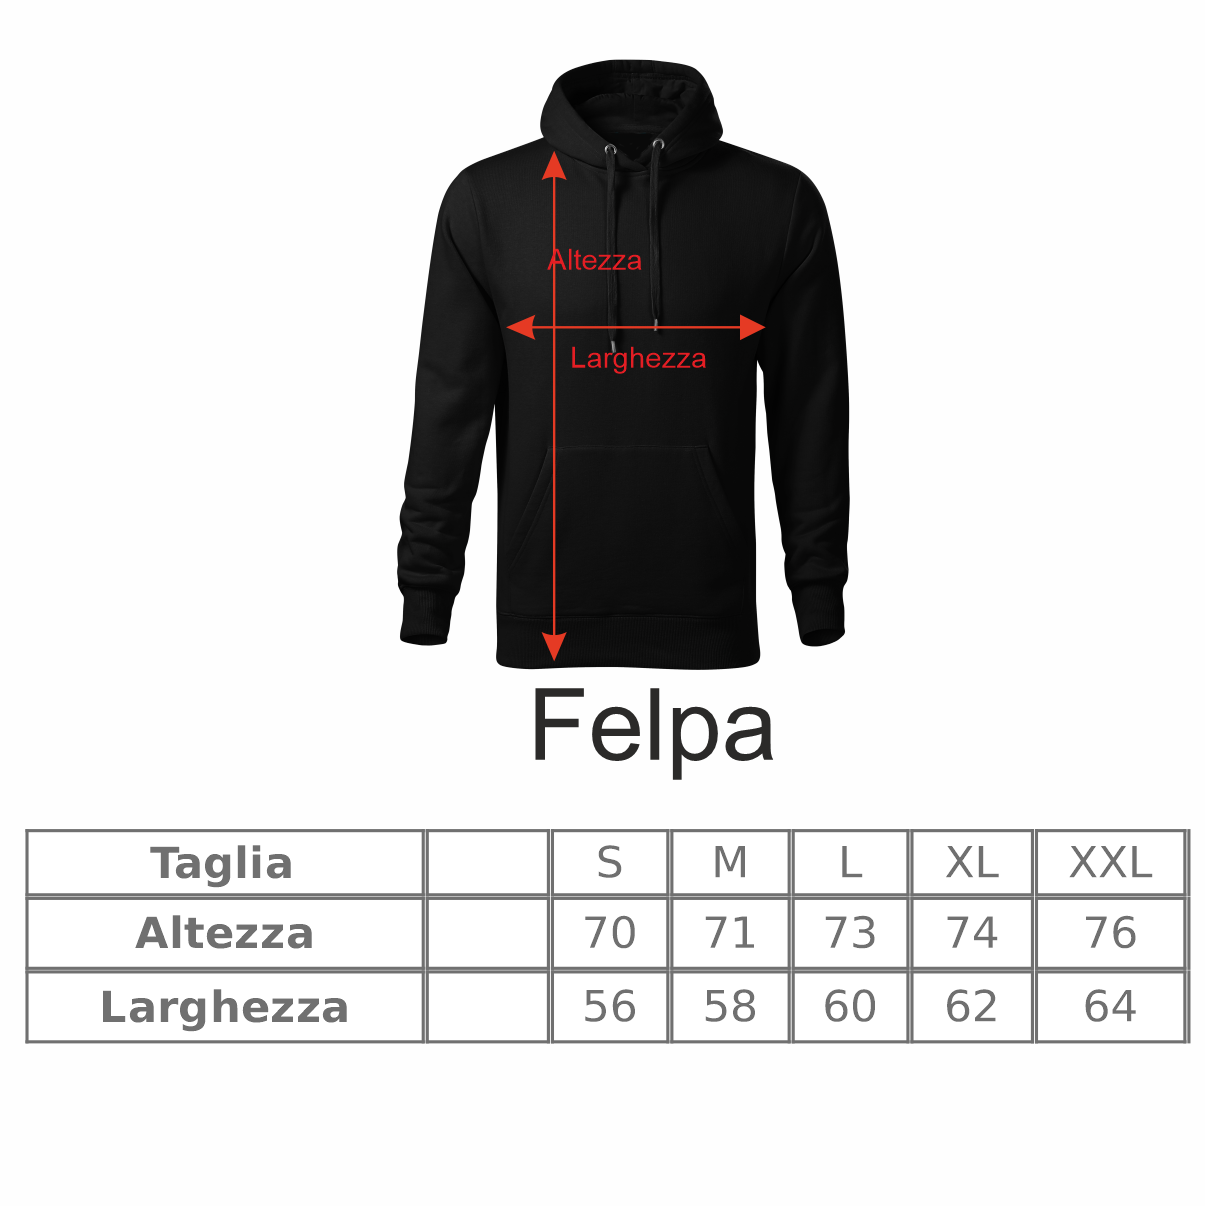 Felpa ZENA Original - Con cappuccio